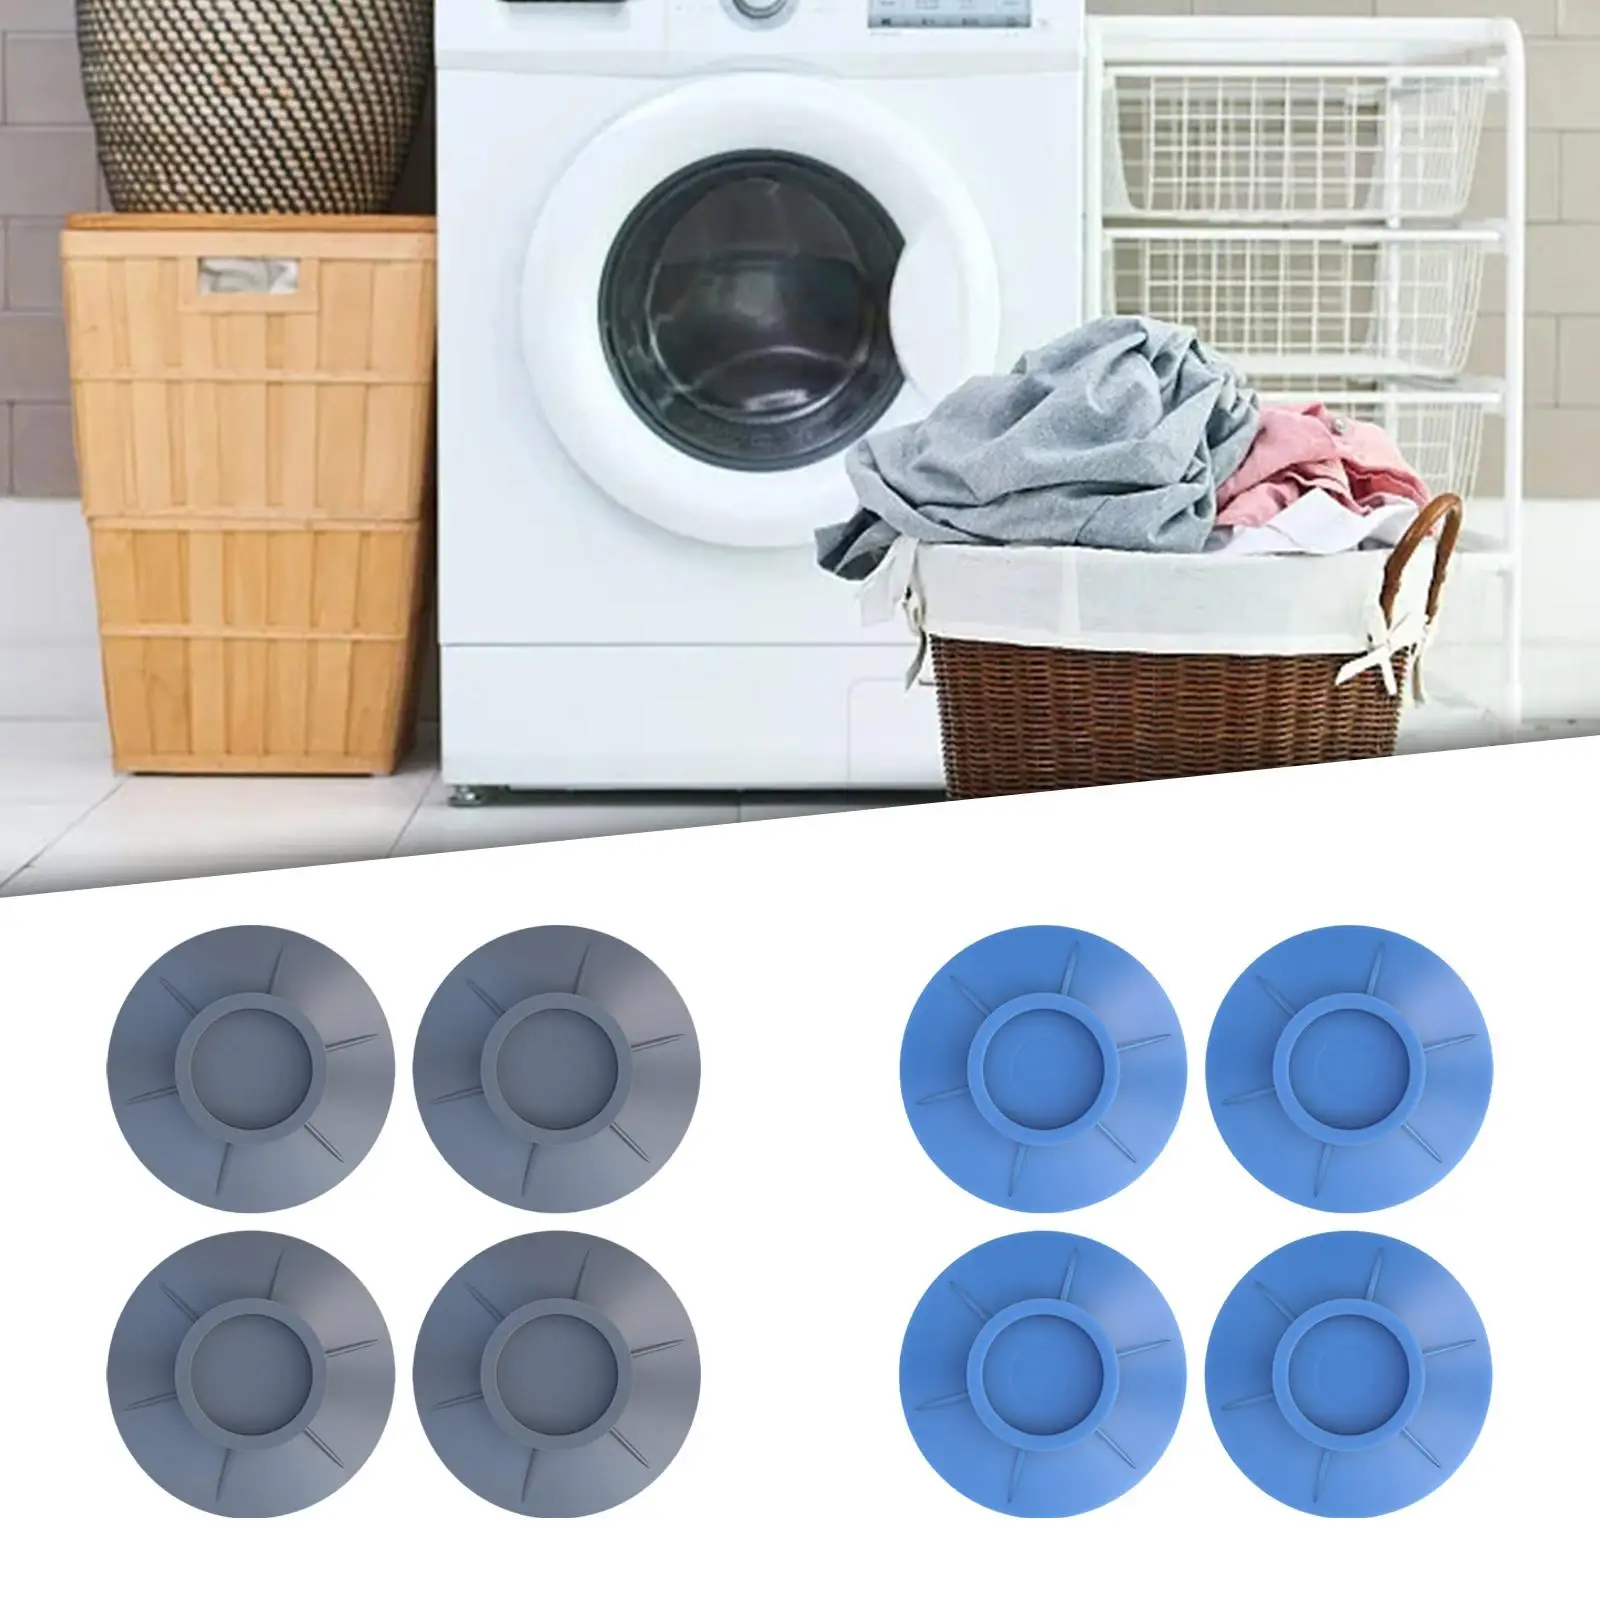 4 Pieces Washing Machine Floor Mat Silent Rubber Silent Skid Raiser Mat Durable Non Slip for Washing Machine Appliances Home